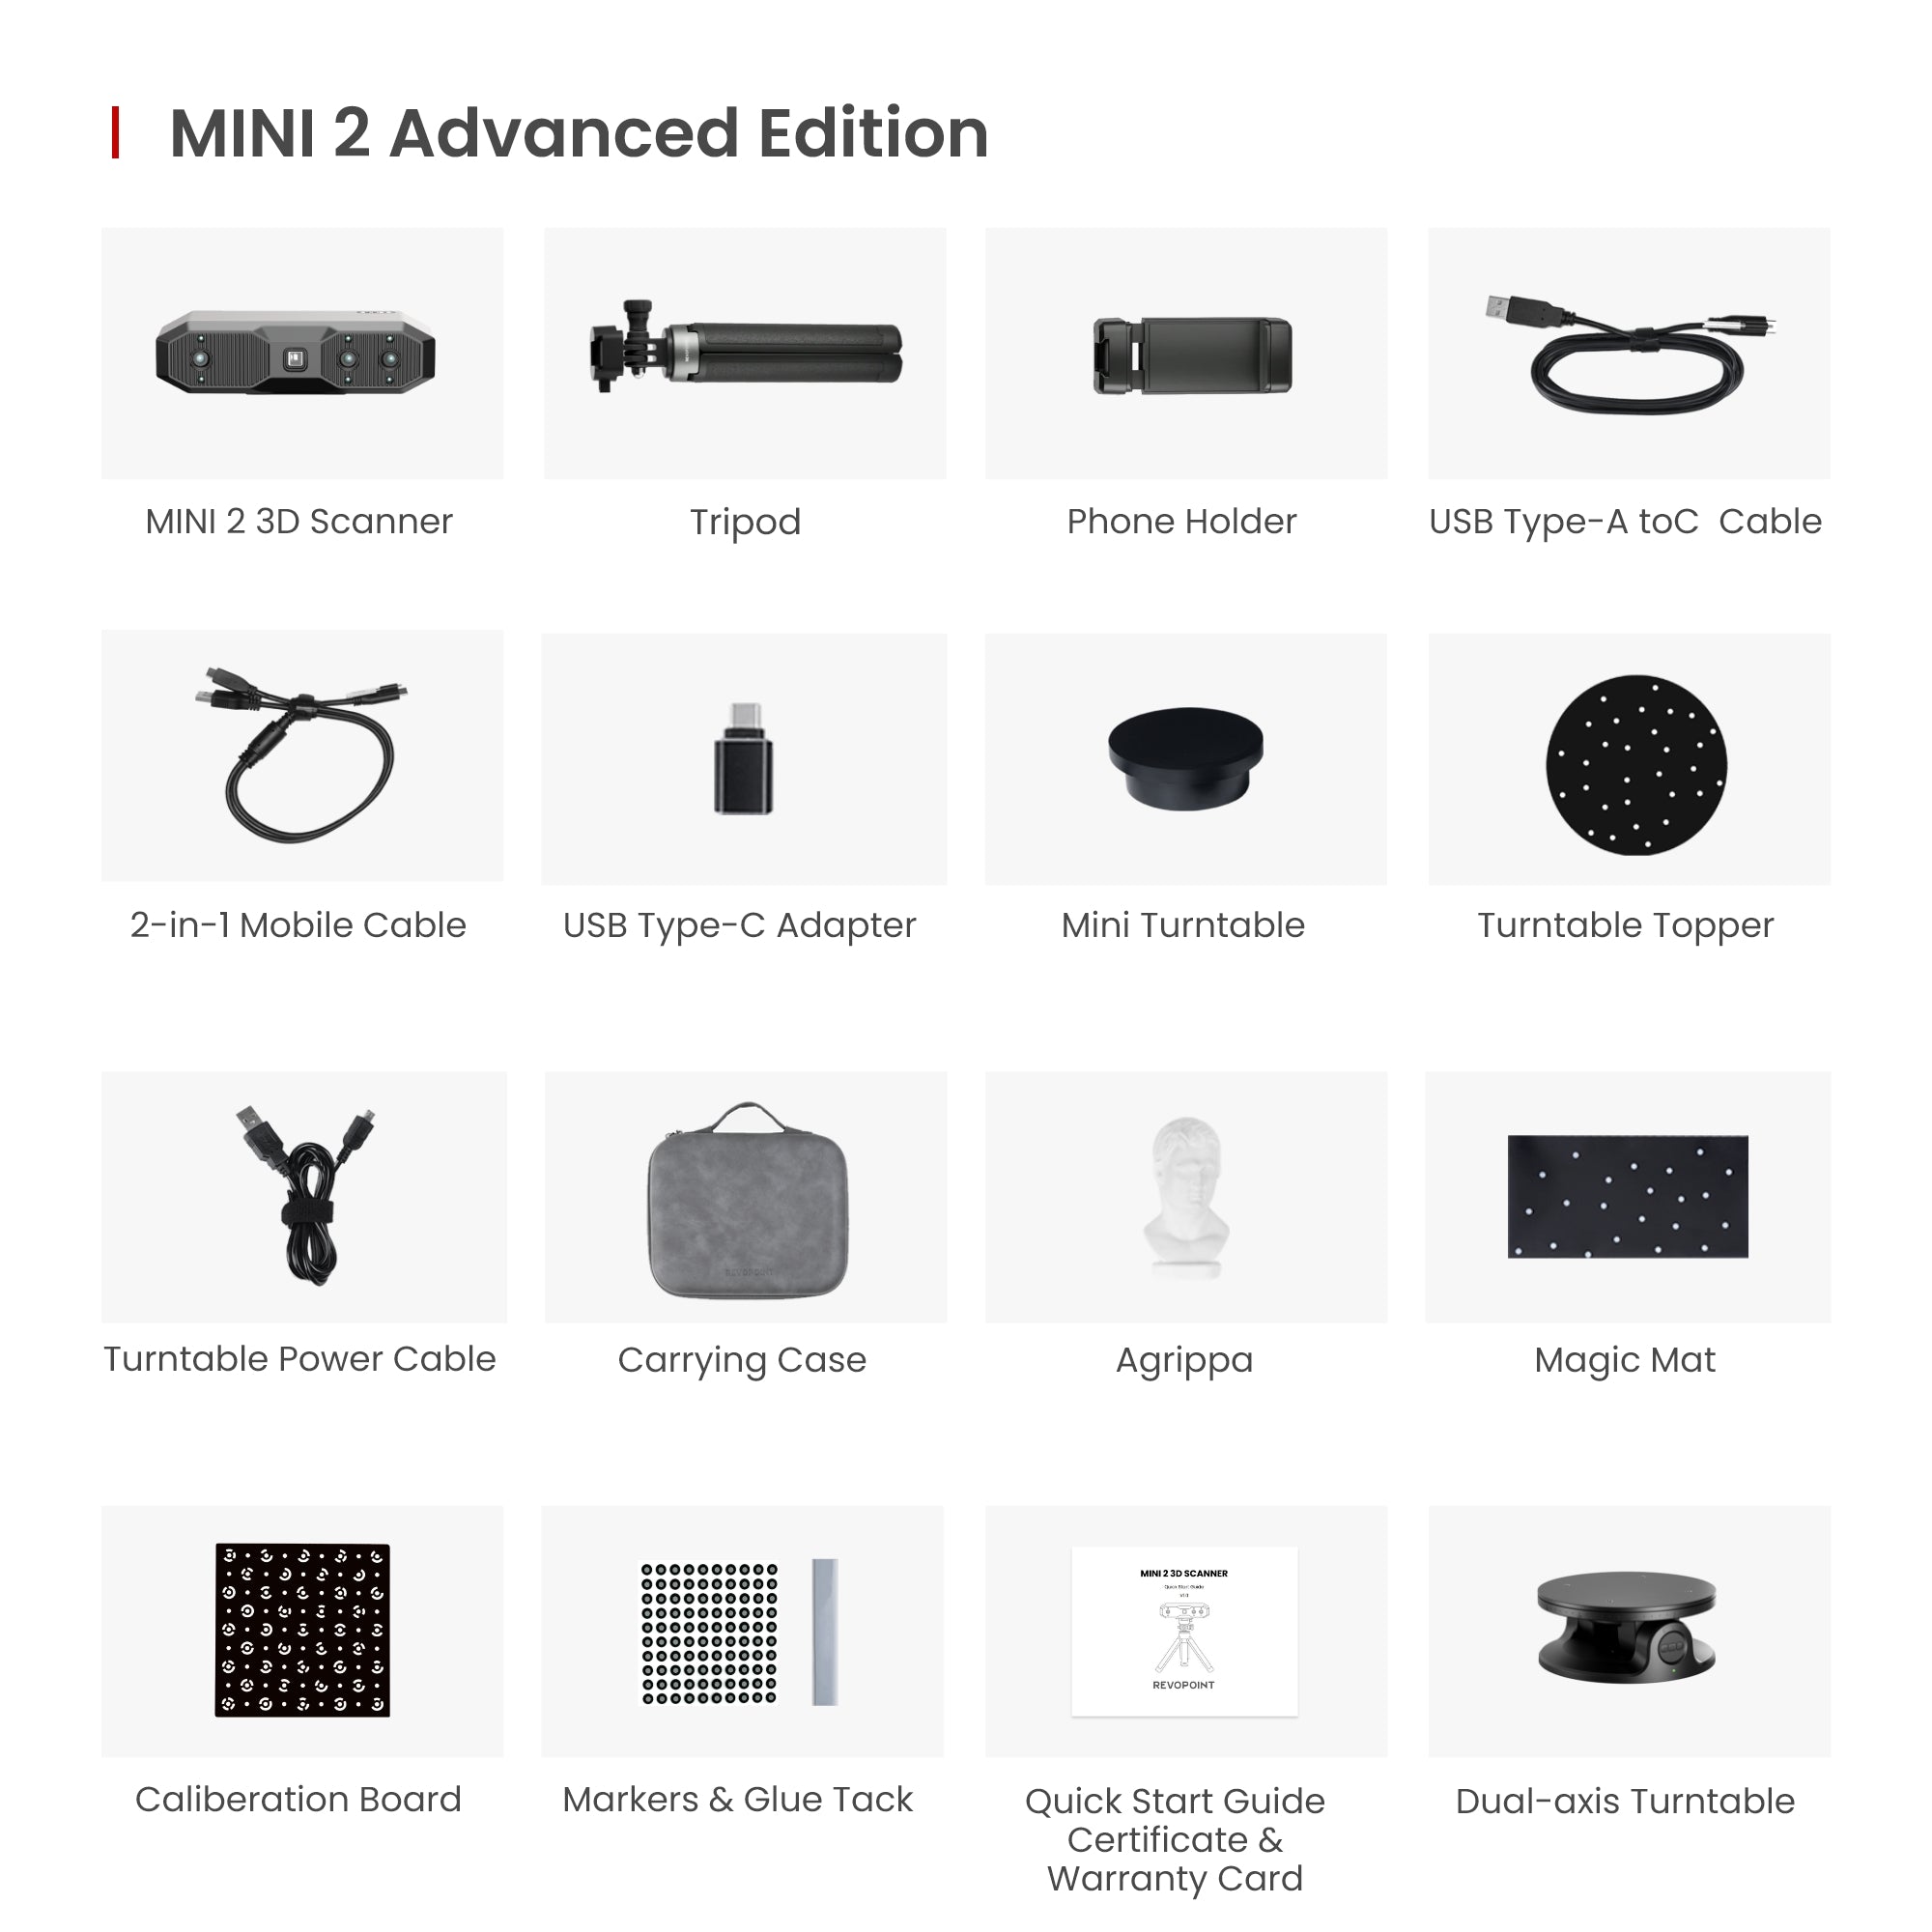 MINI 2 3D Scanner: Blue Light丨Precision 0.02mm